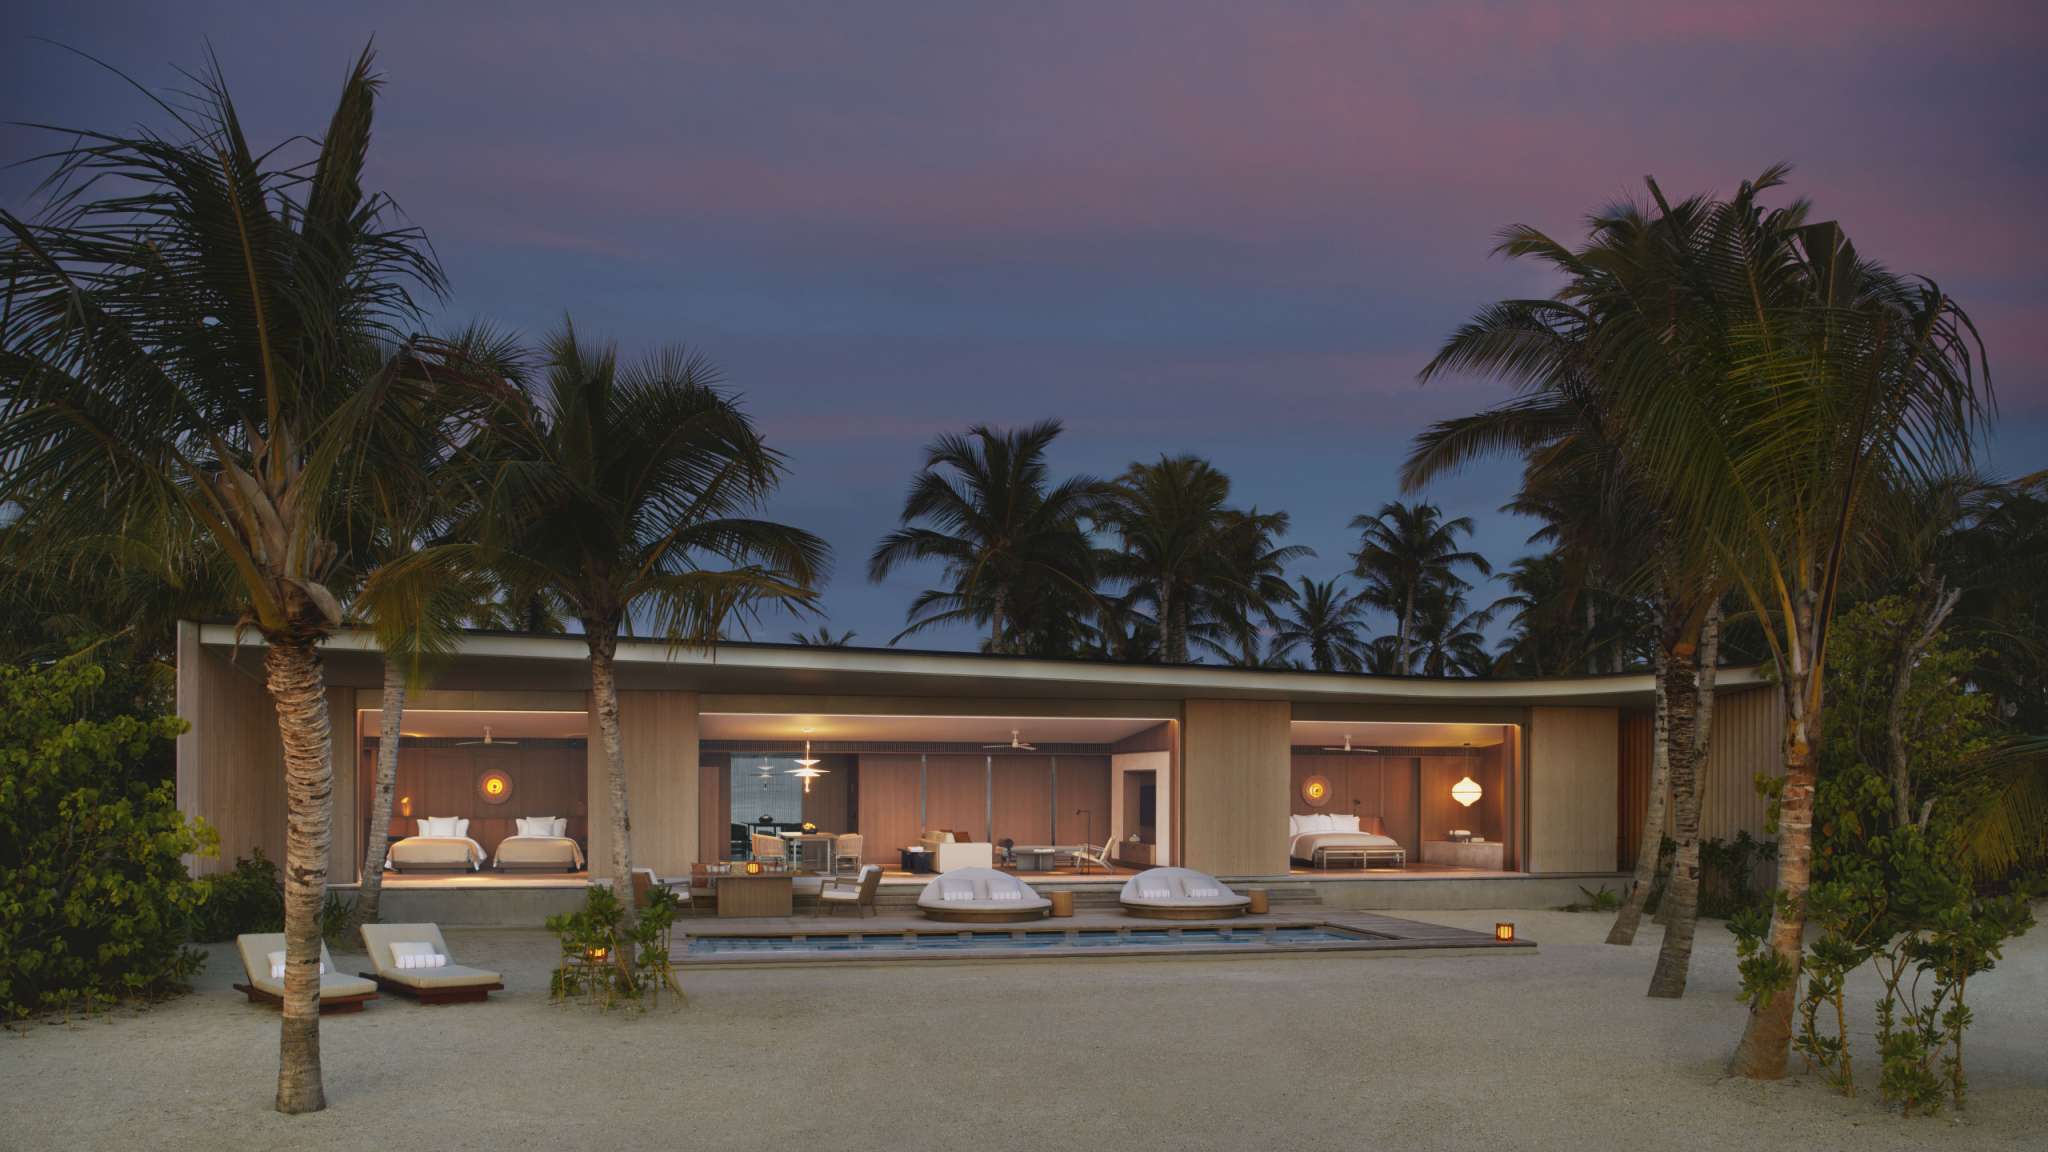 The ritz carlton maldives, fari islands   two bedroom beach villa   looking in (1).